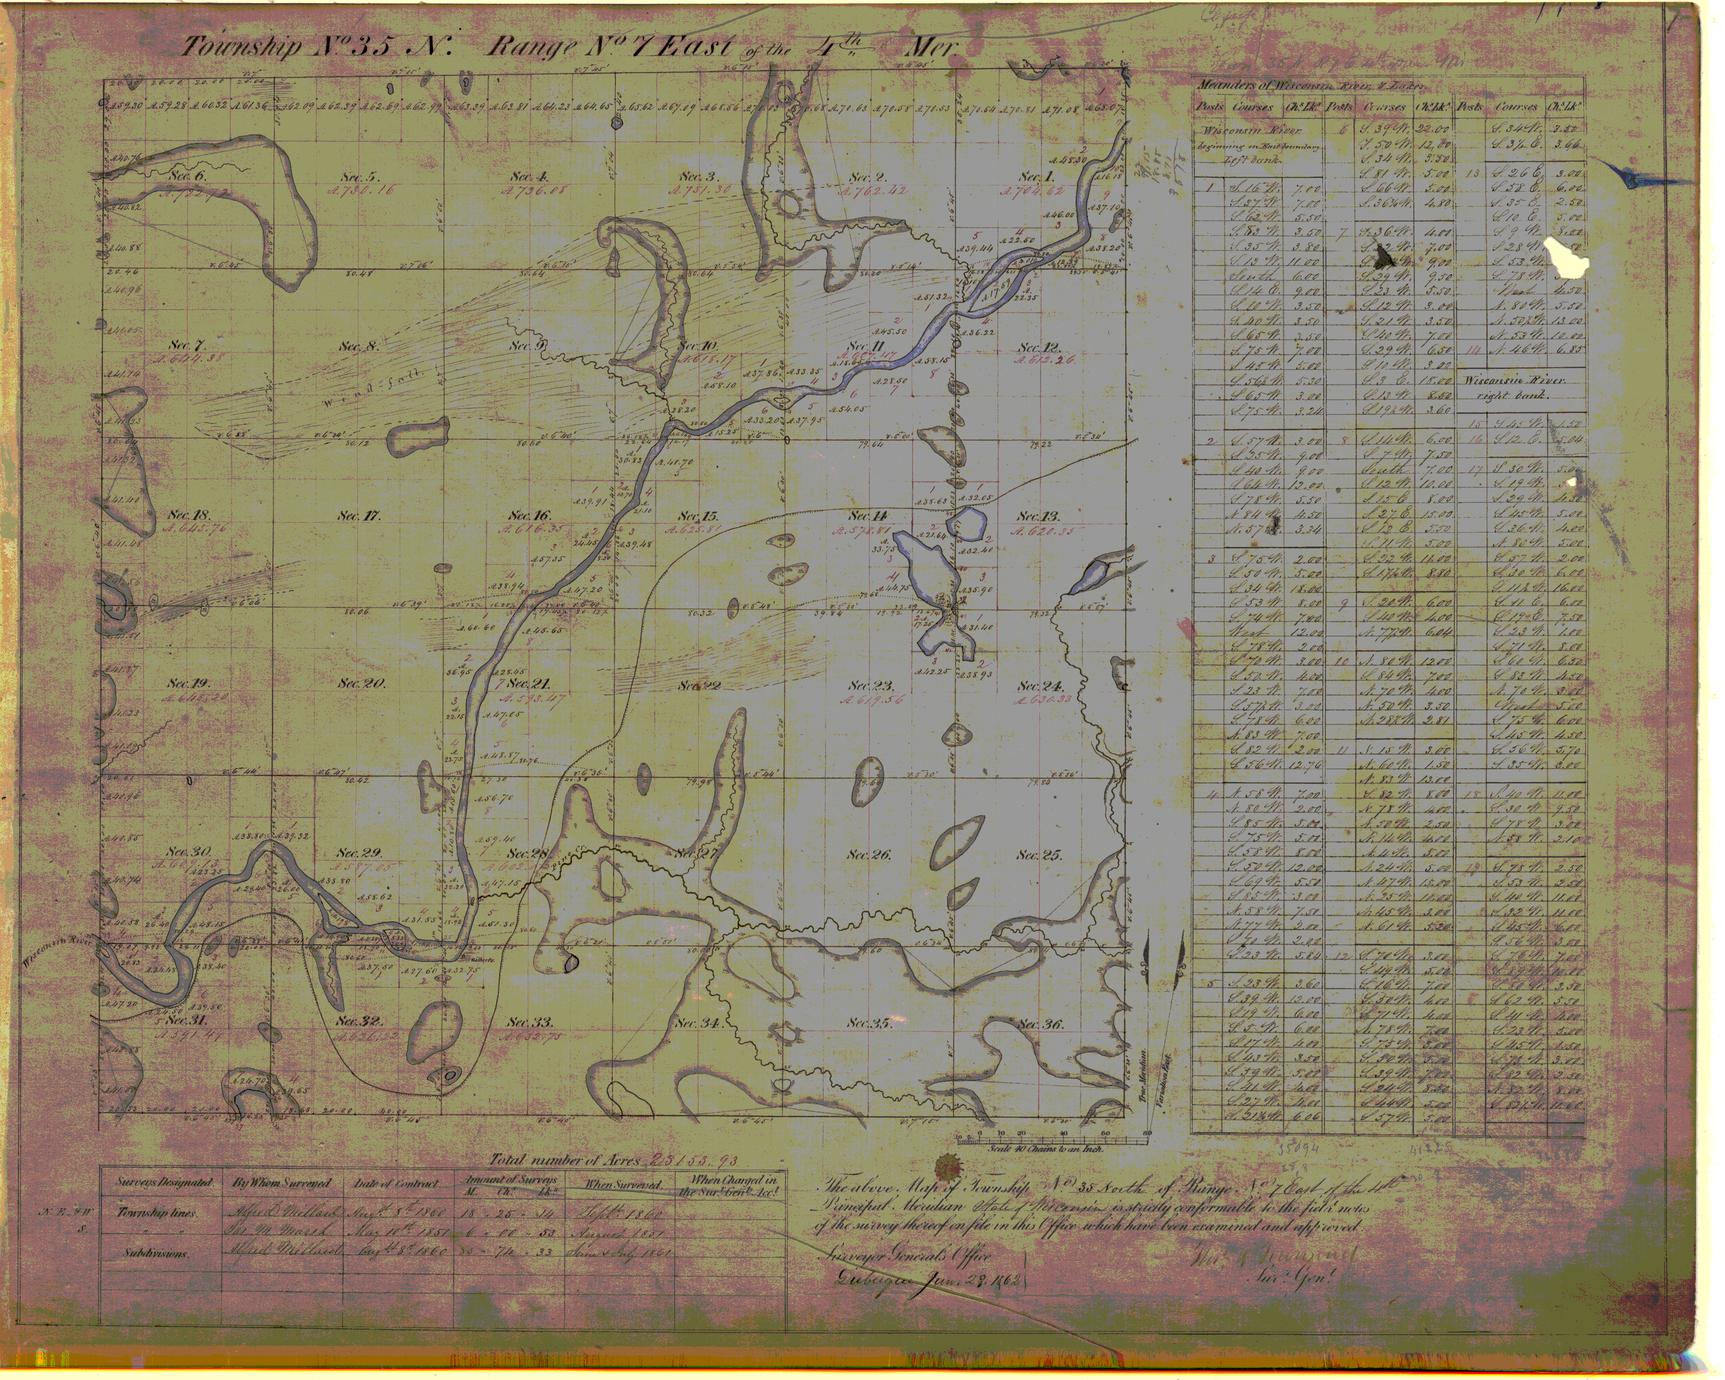 [Public Land Survey System map: Wisconsin Township 35 North, Range 07 East]